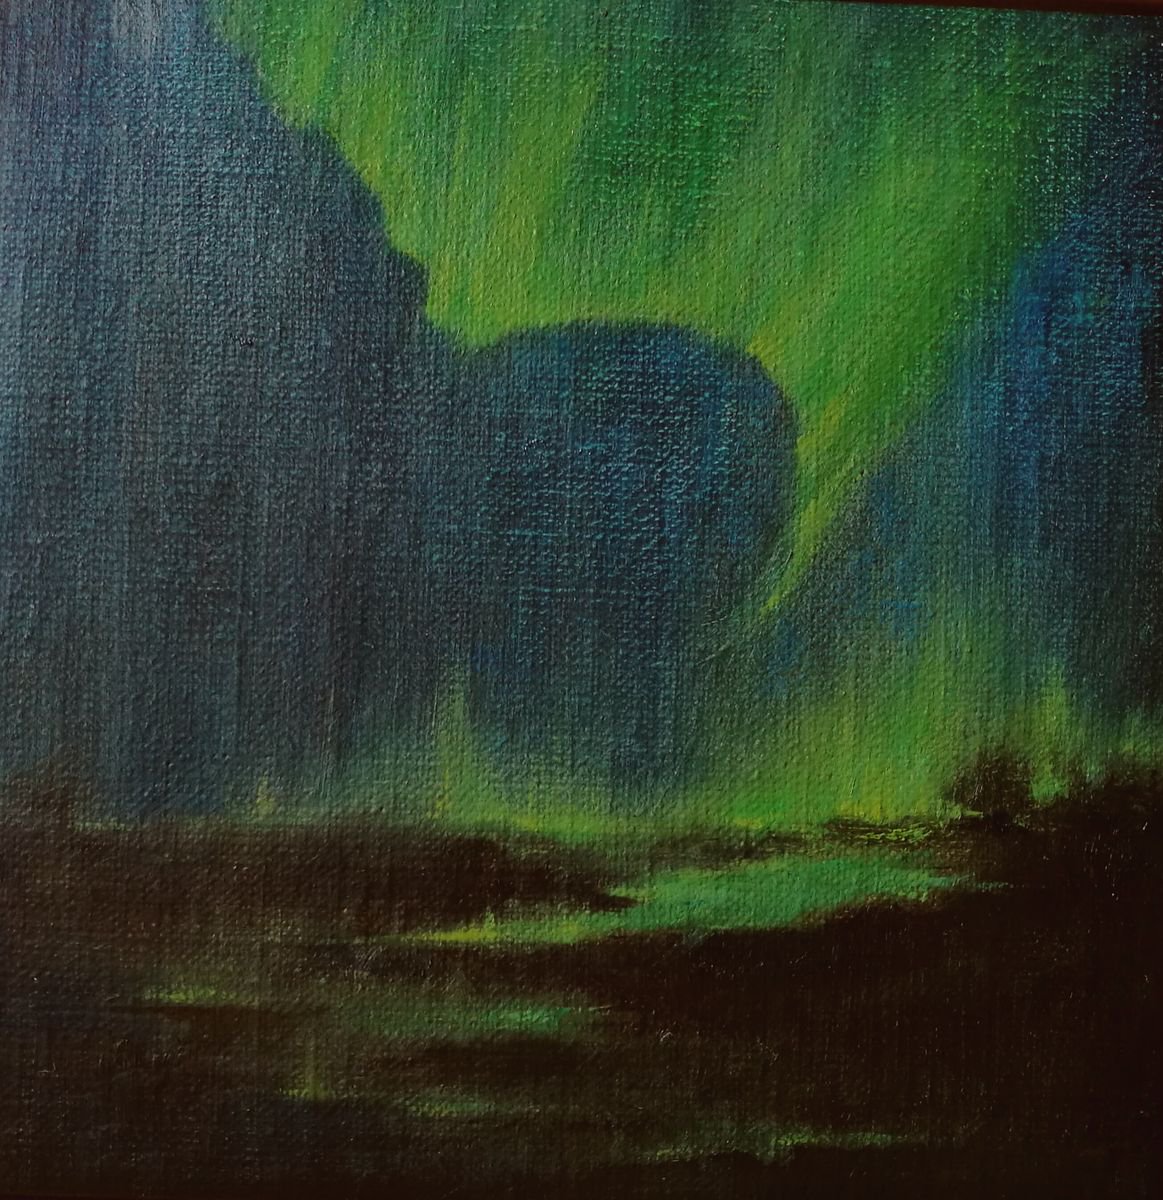 Sky Magic - Aurora Borealis, Miniature painting by Daniela Roughsedge